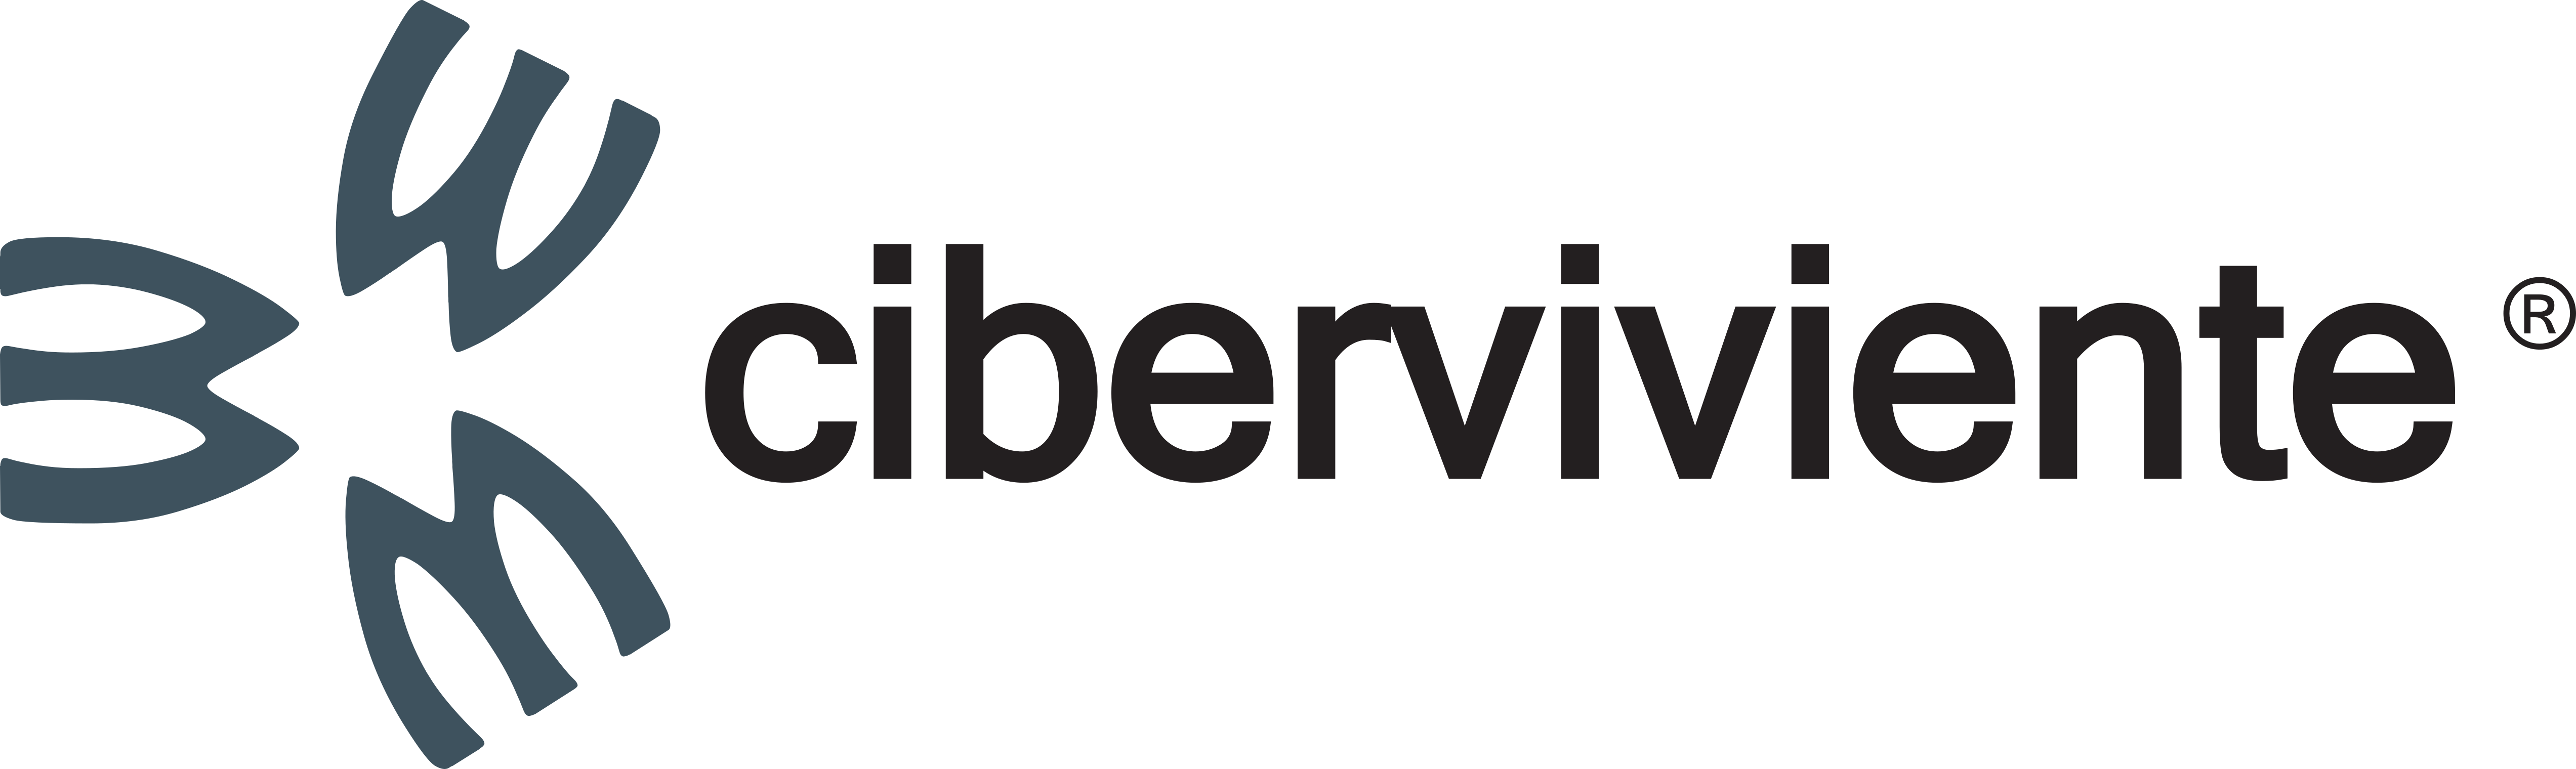 logo_ciberviviente